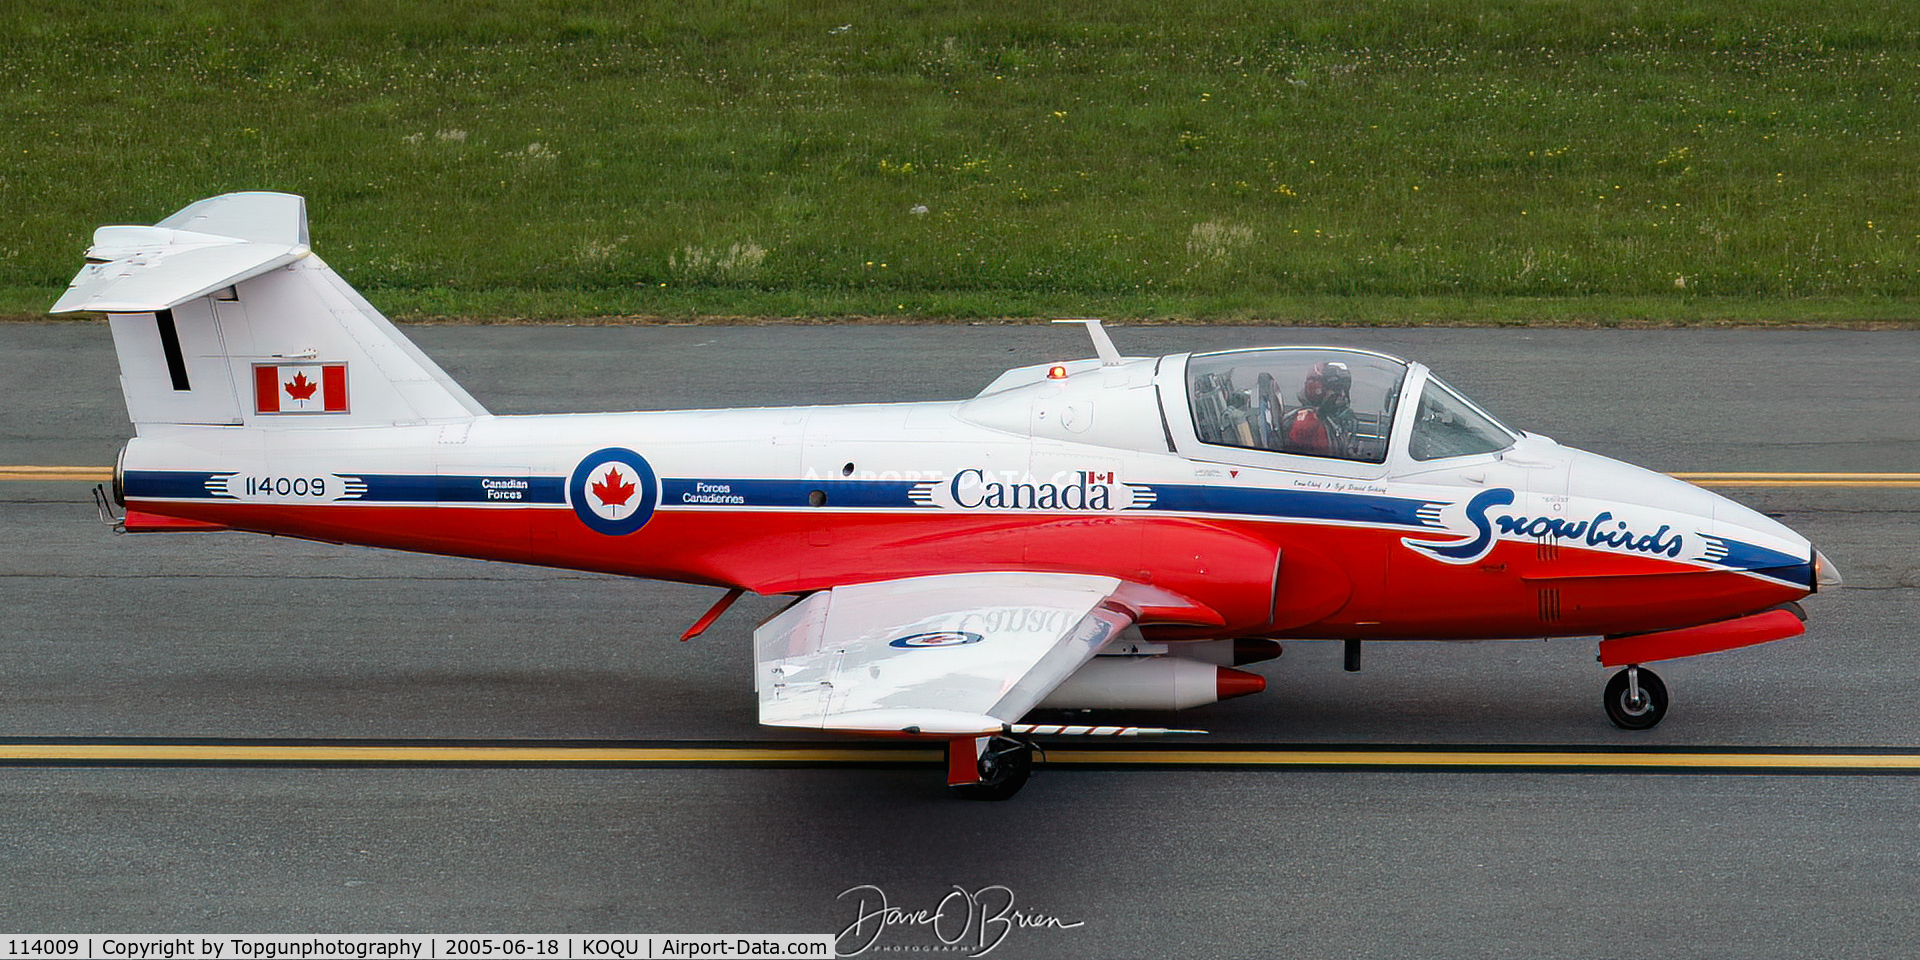 114009, Canadair CT-114 Tutor C/N 1009, Snowbirds taxiing by